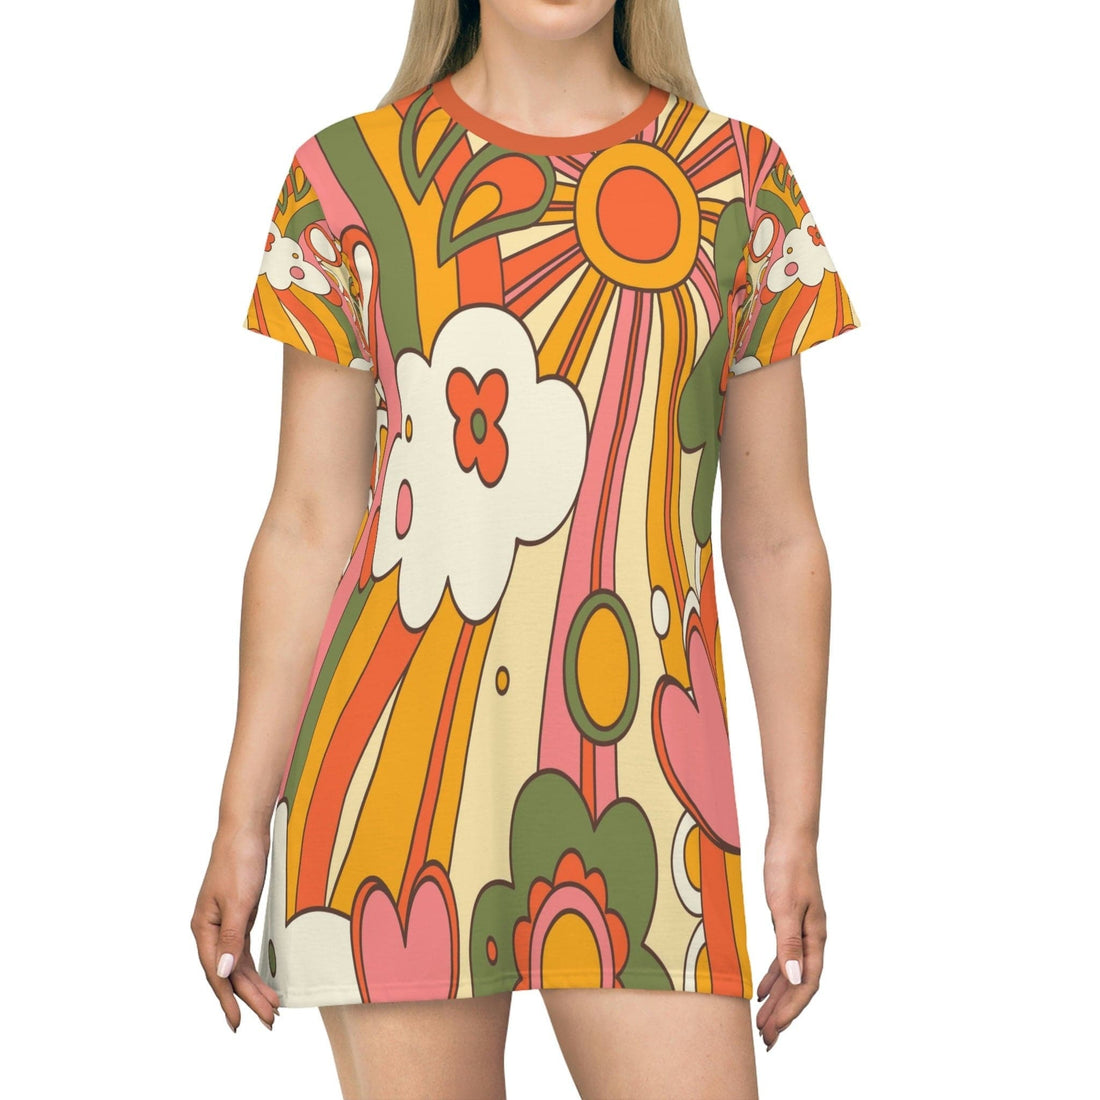 Kate McEnroe New York Retro Groovy Hippie 70s Sunburst T - Shirt Dress in Mid Century Modern Burnt Orange, Mustard Yellow, Green, Summer Party Dress, Hippie GiftsDresses78158986891170229088